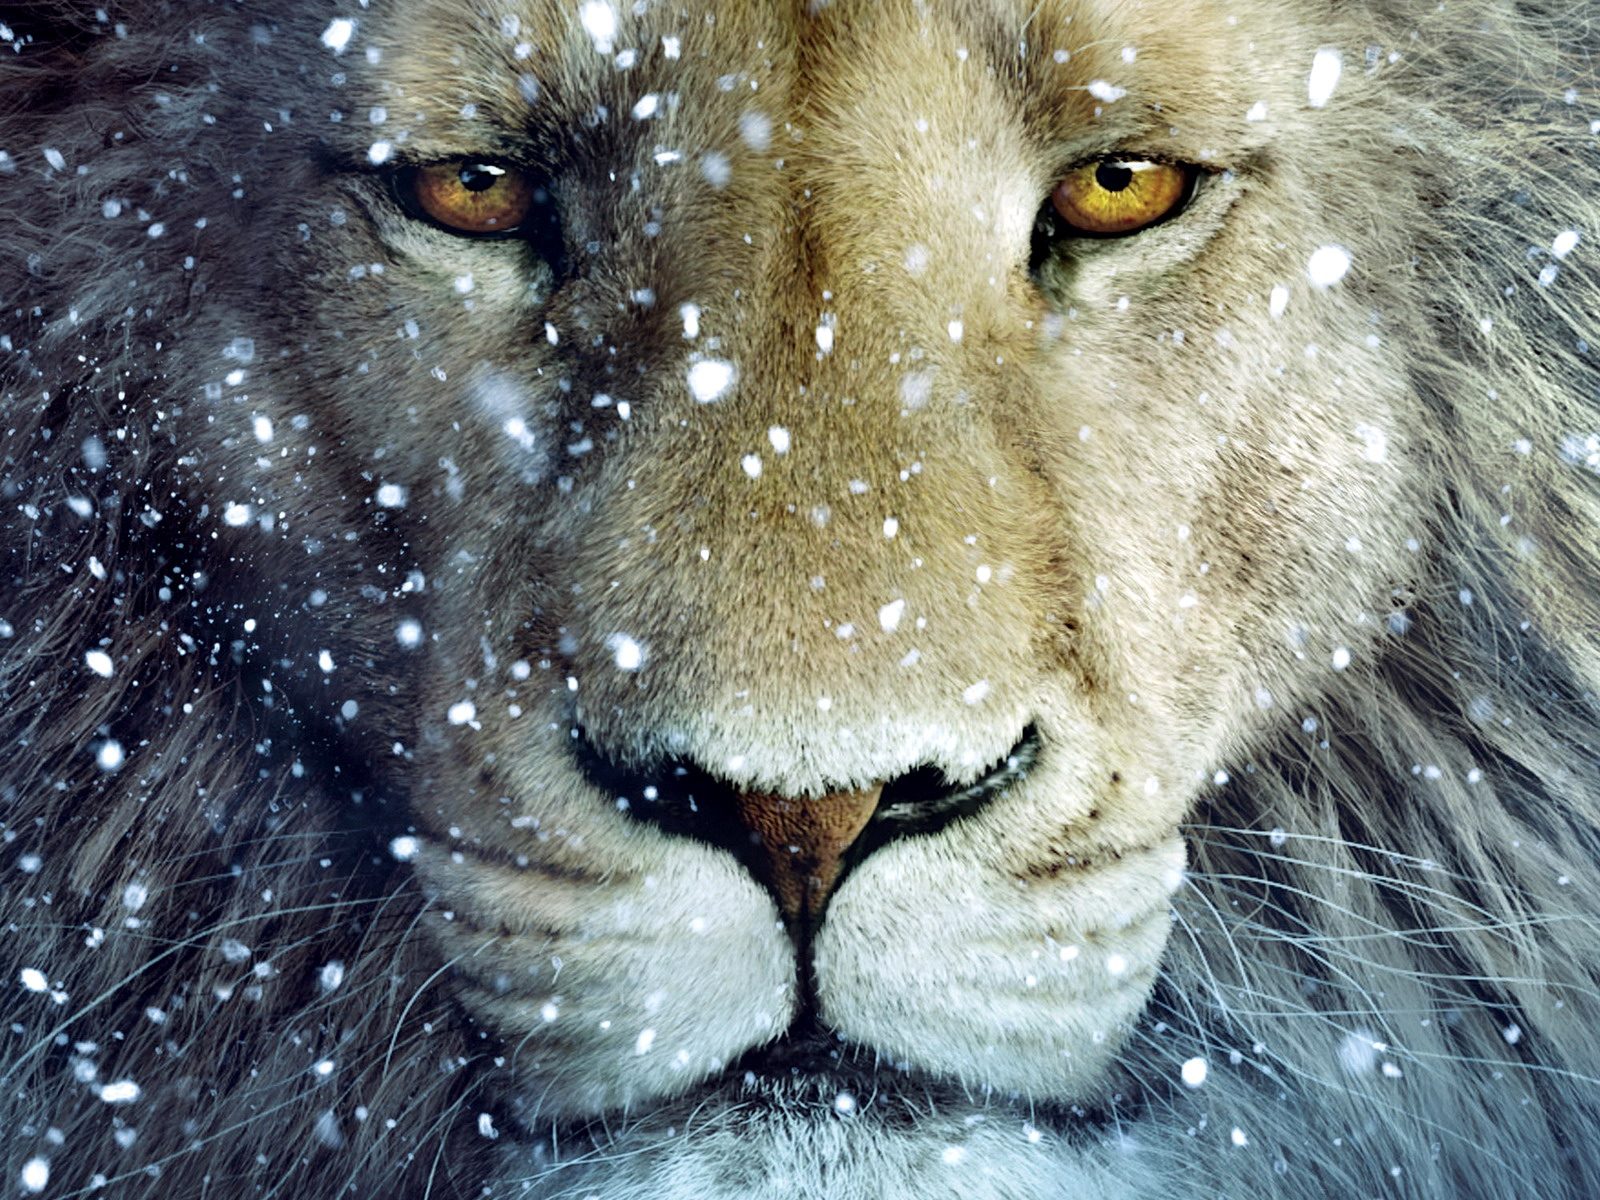 http://3.bp.blogspot.com/-gBNkI6JvpgA/TuOXw_h1CAI/AAAAAAAABds/-YzJMpImI4I/s1600/Aslan-Lion-3-The-Chronicles-of-Narnia-Wallpaper.jpg